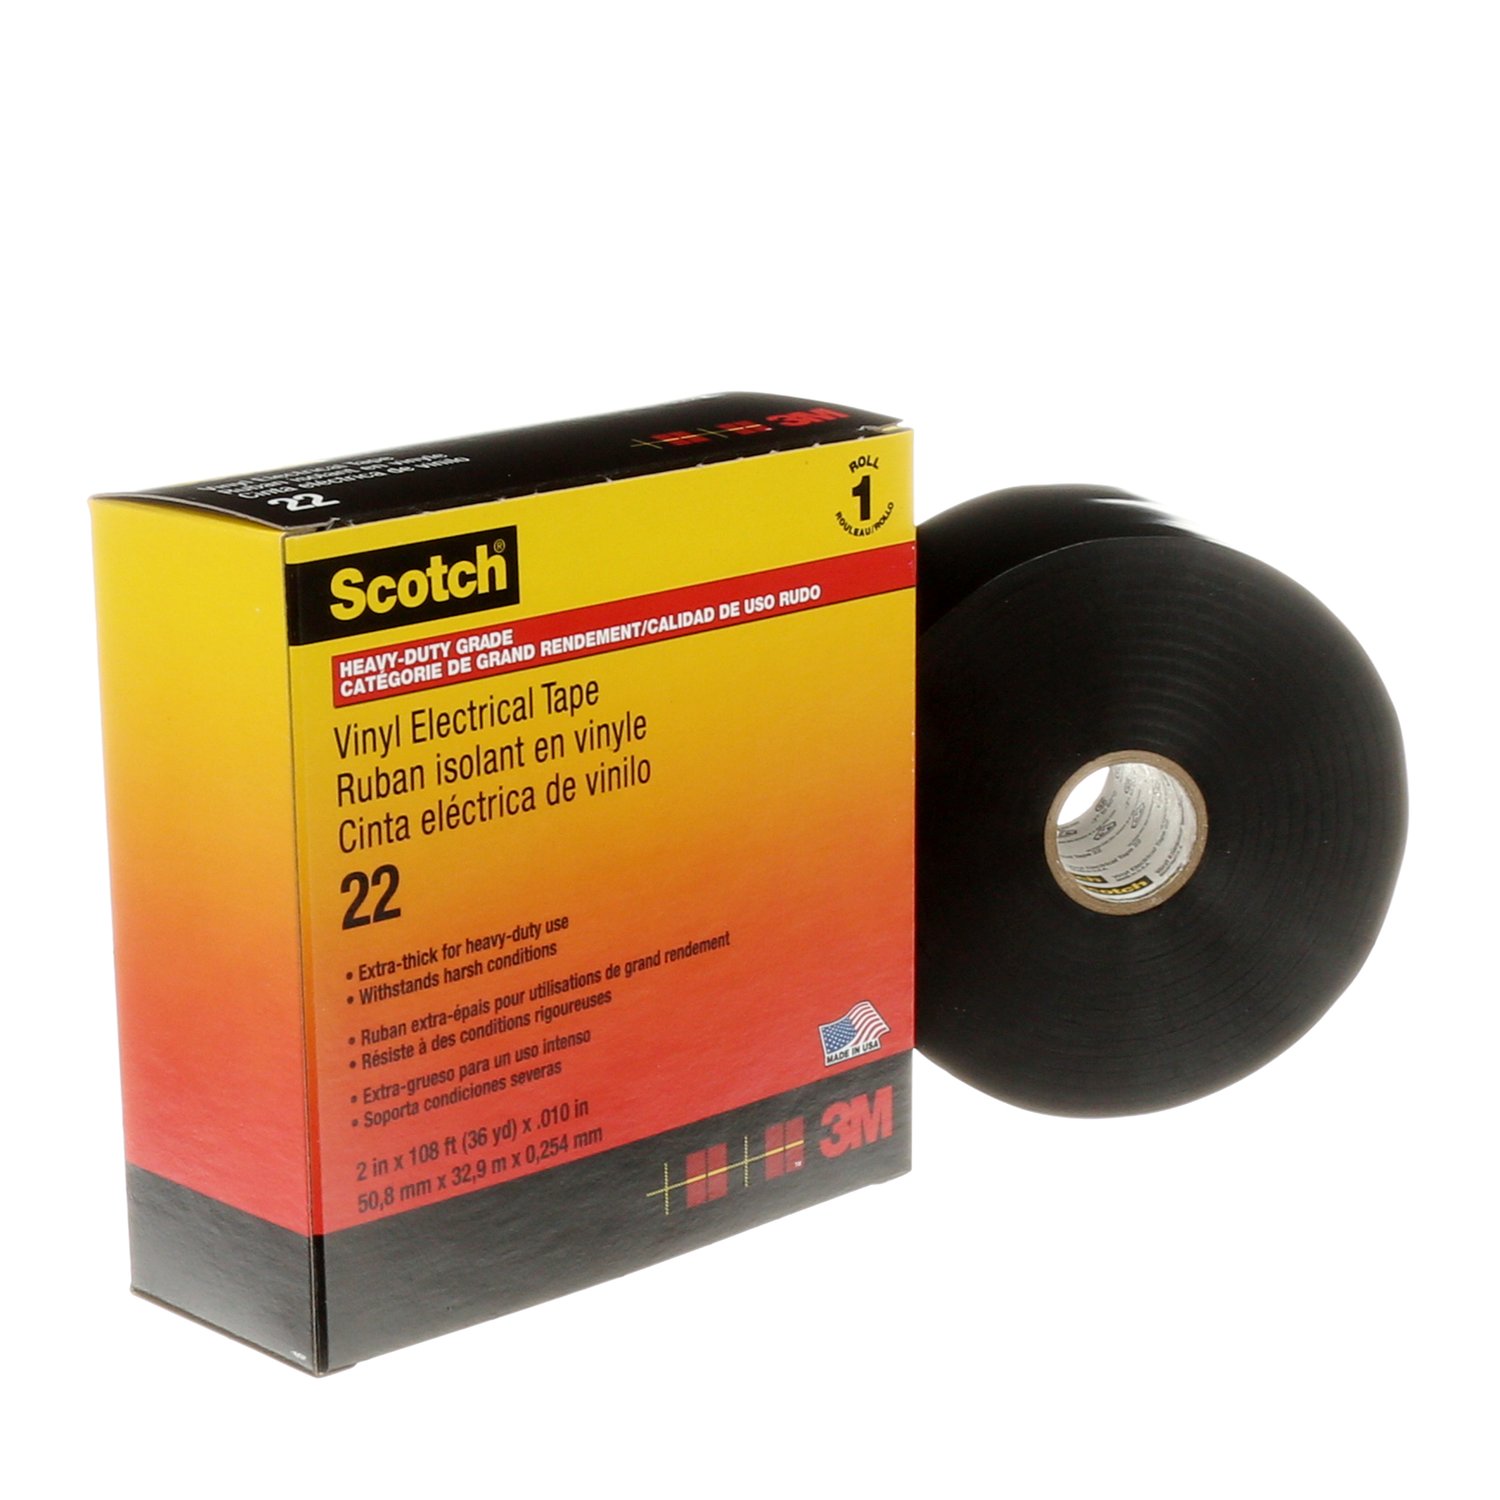 7000031346 - Scotch Vinyl Electrical Tape 22, 2 in x 36 yd, Black, 1 roll/carton, 12
rolls/Case